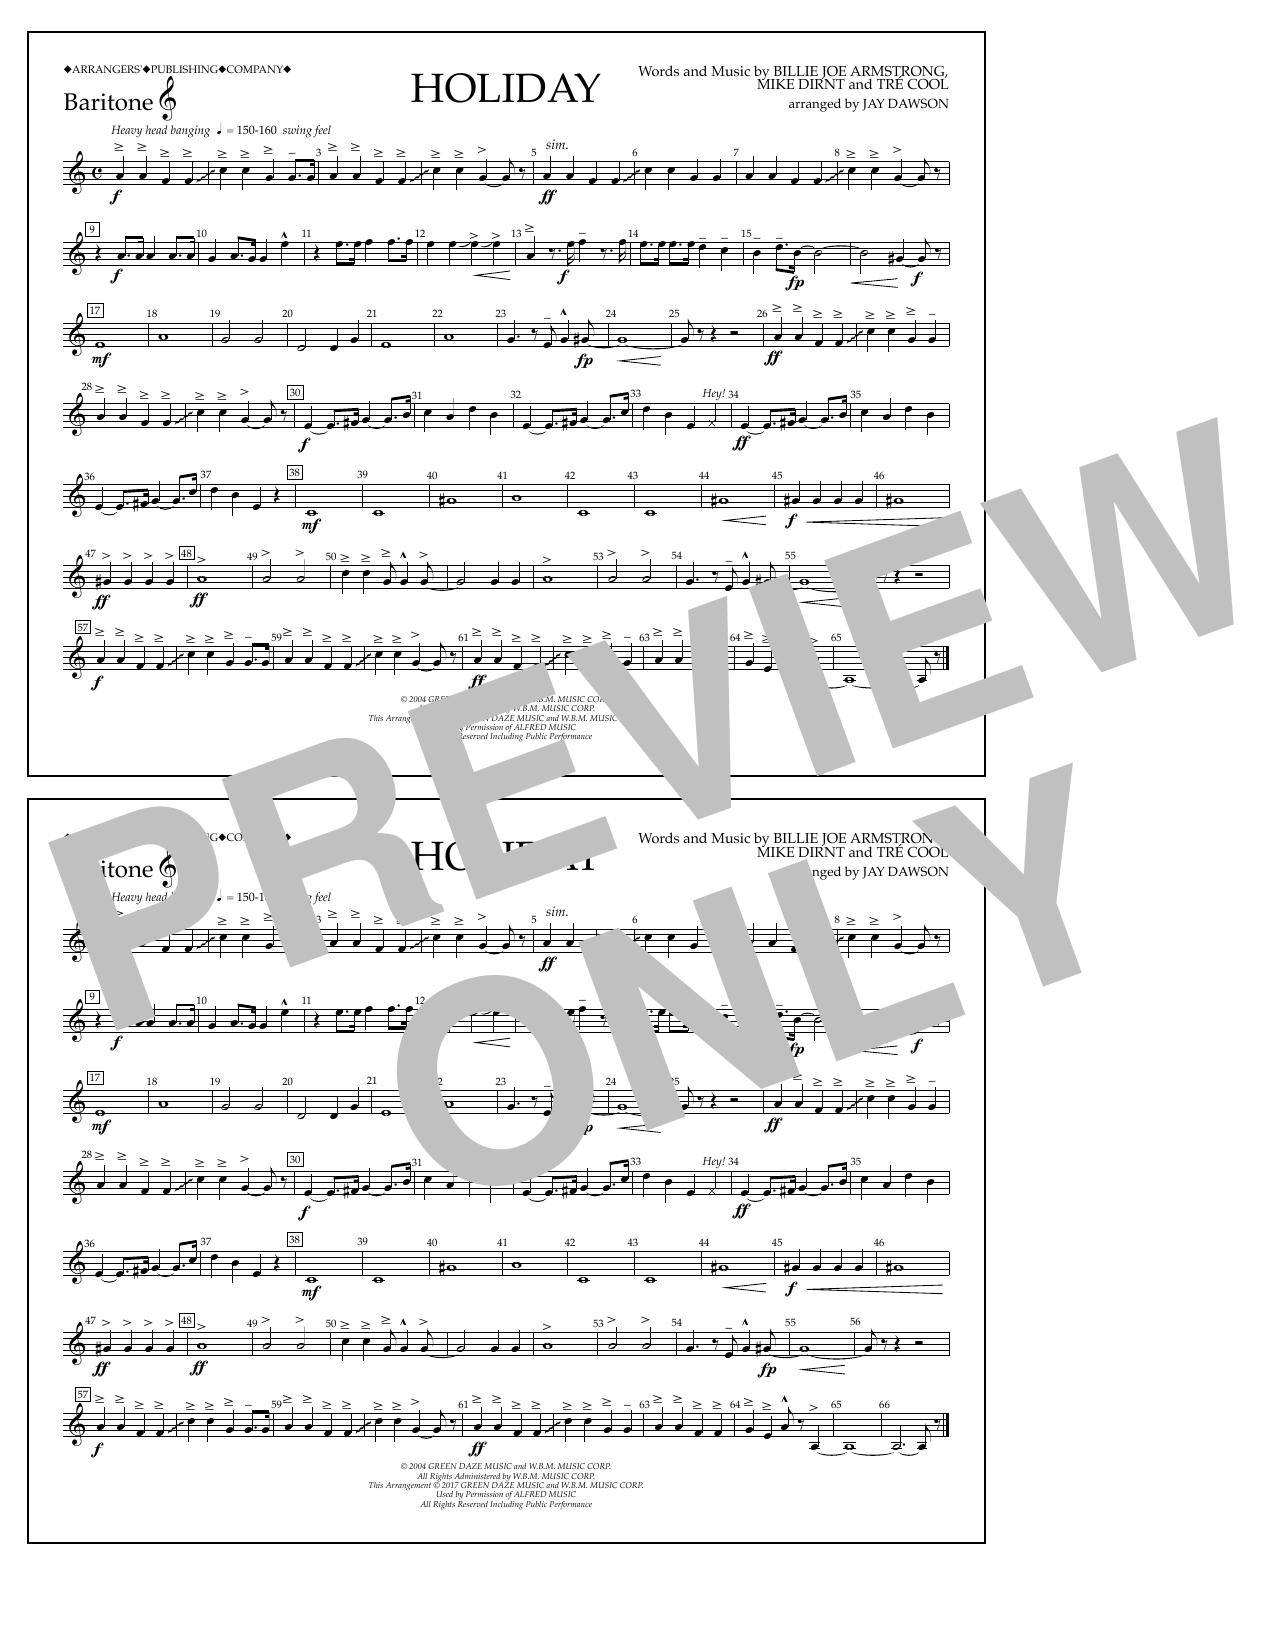 Jay Dawson Holiday - Baritone T.C. Sheet Music Notes & Chords for Marching Band - Download or Print PDF